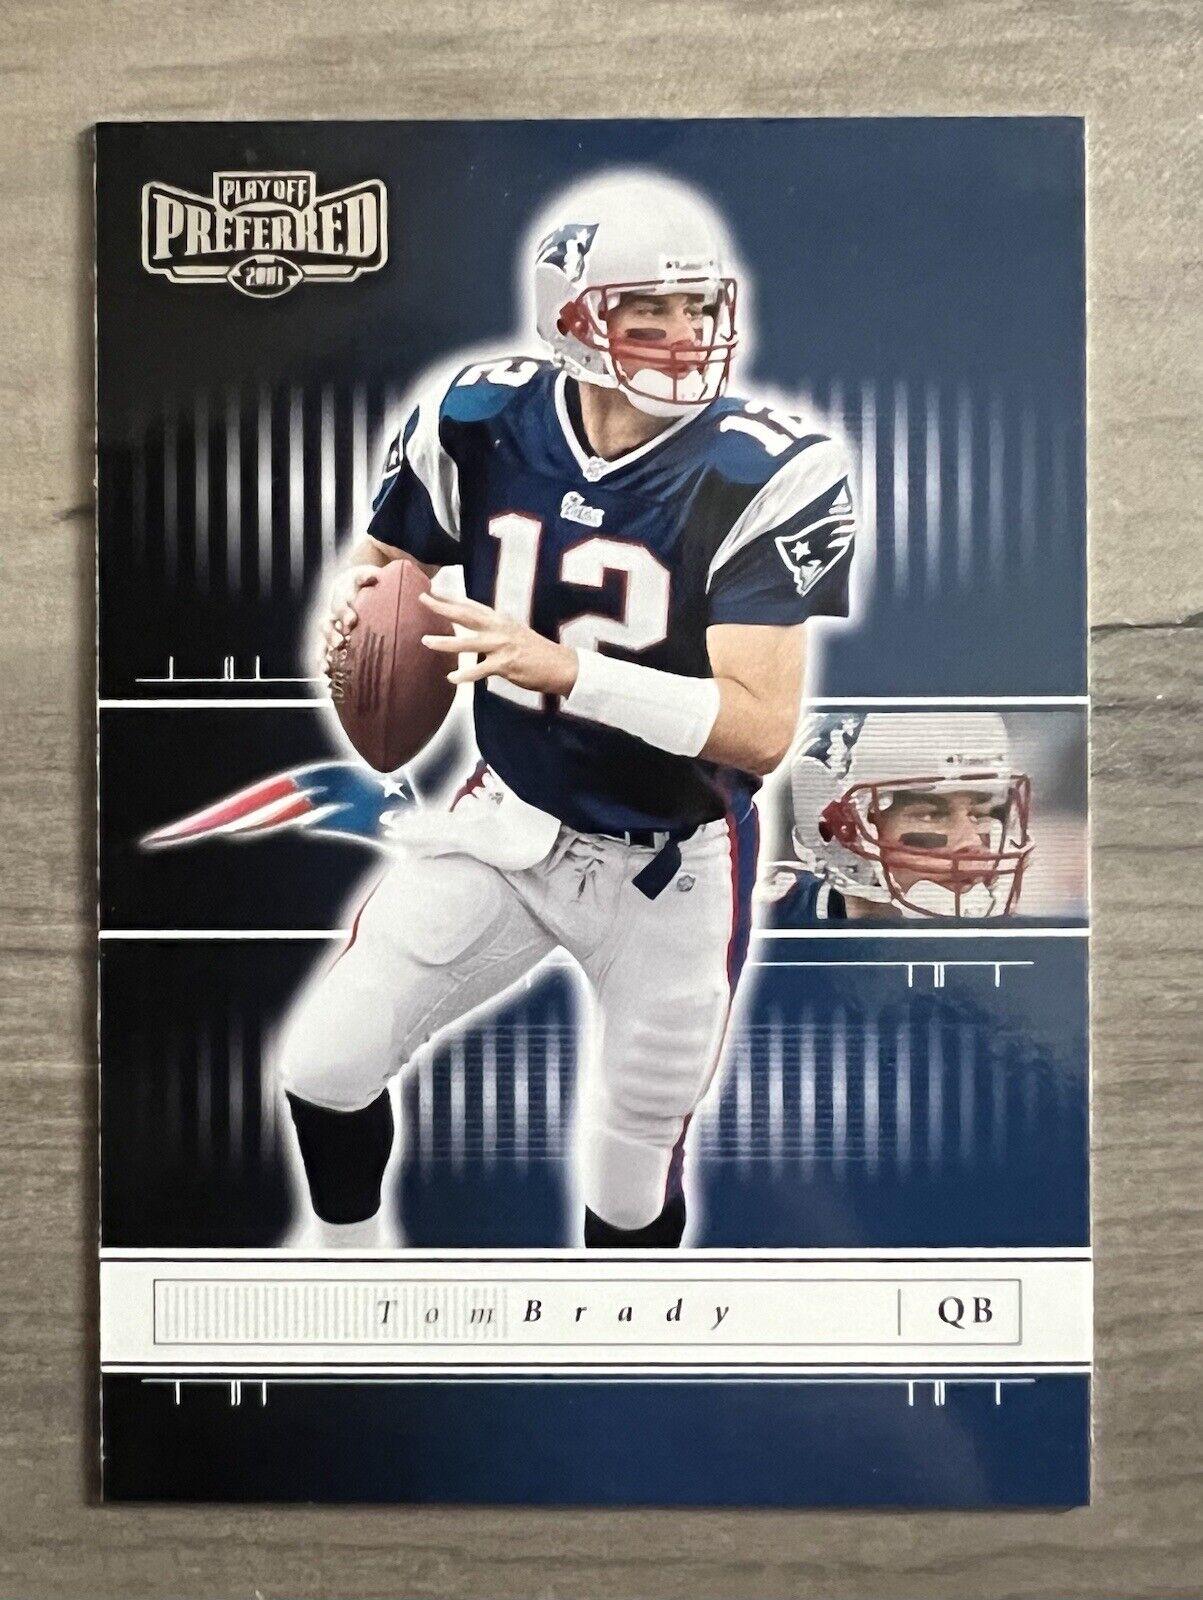 2001 Playoff Preferred #33 Tom Brady 2nd year card New England Patriots NFL